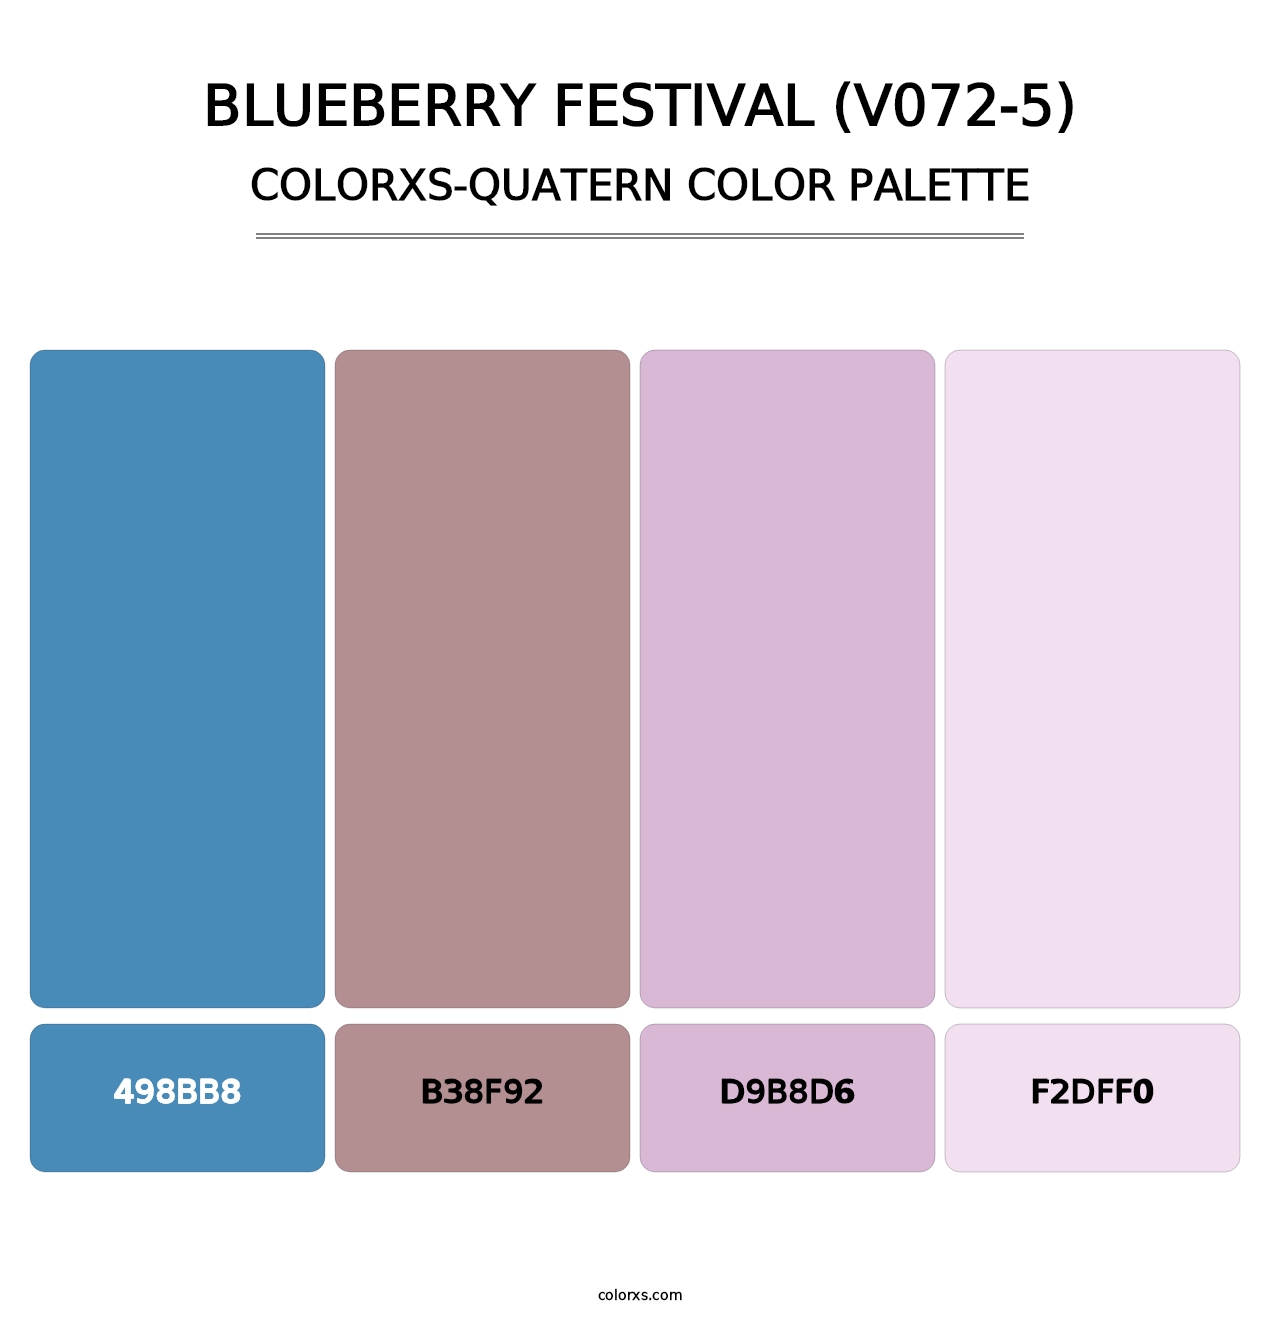 Blueberry Festival (V072-5) - Colorxs Quatern Palette